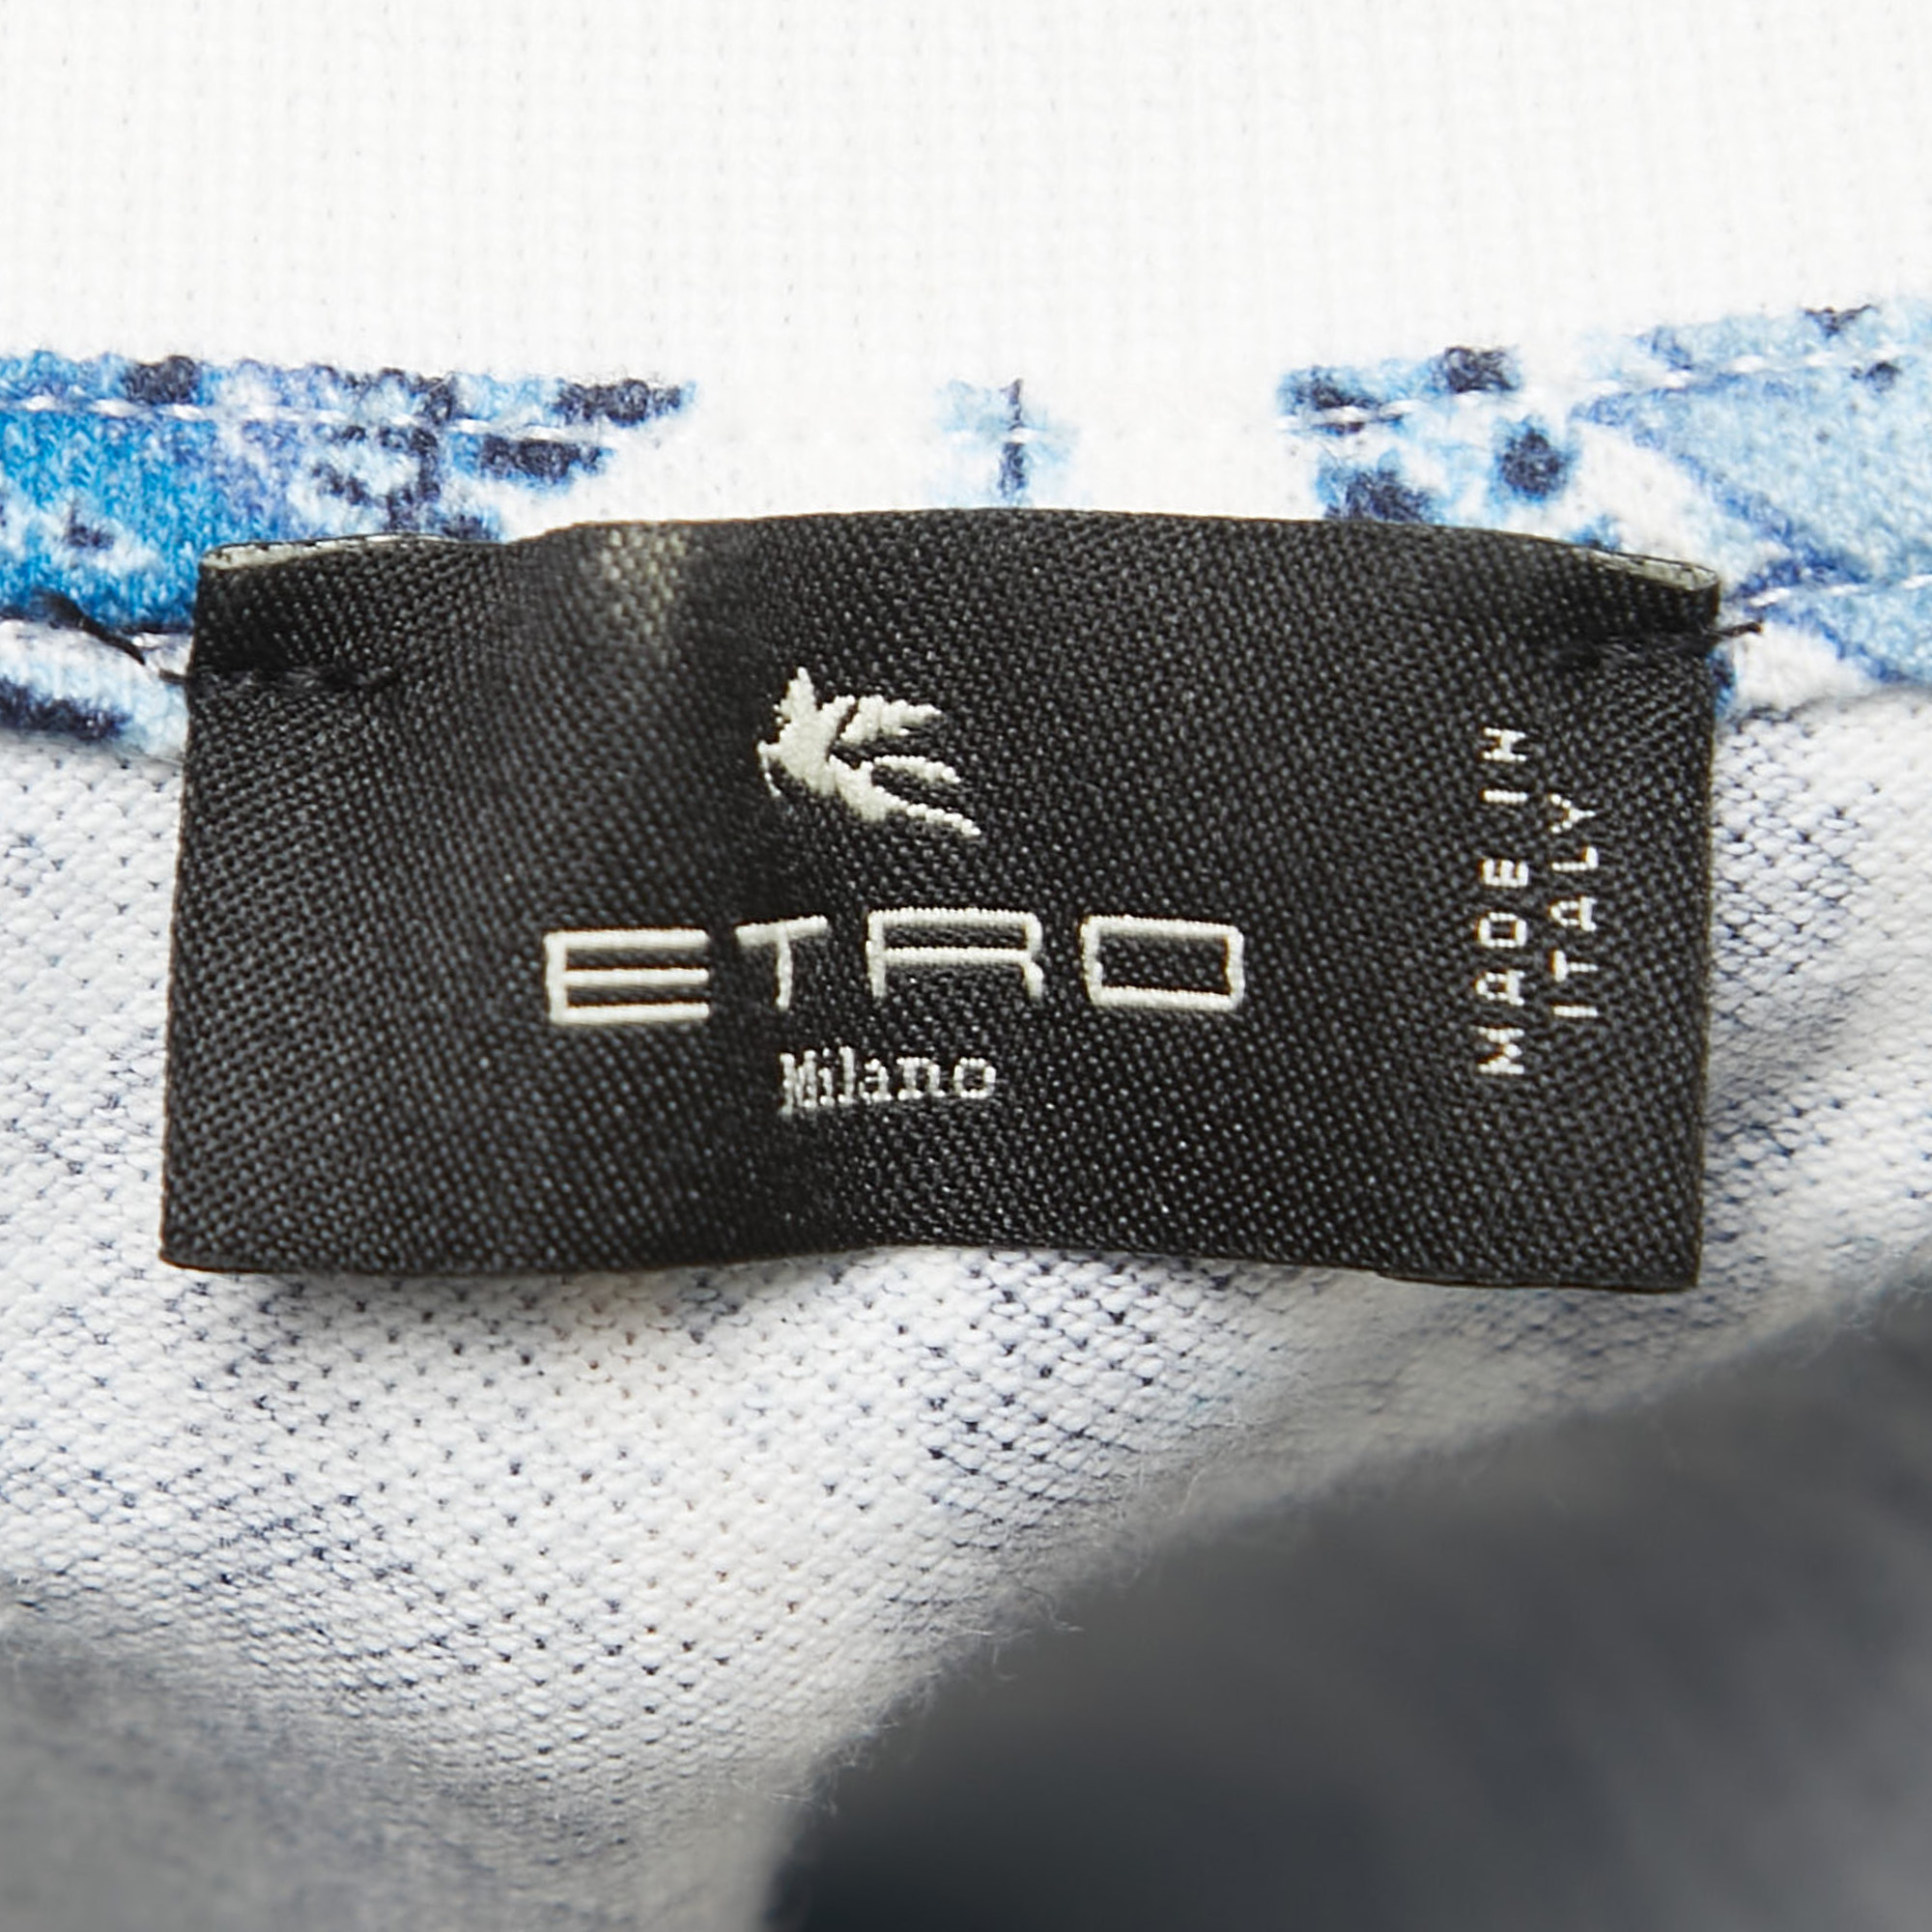 Etro Blue Paisley Printed Cotton Pique Polo T-Shirt S